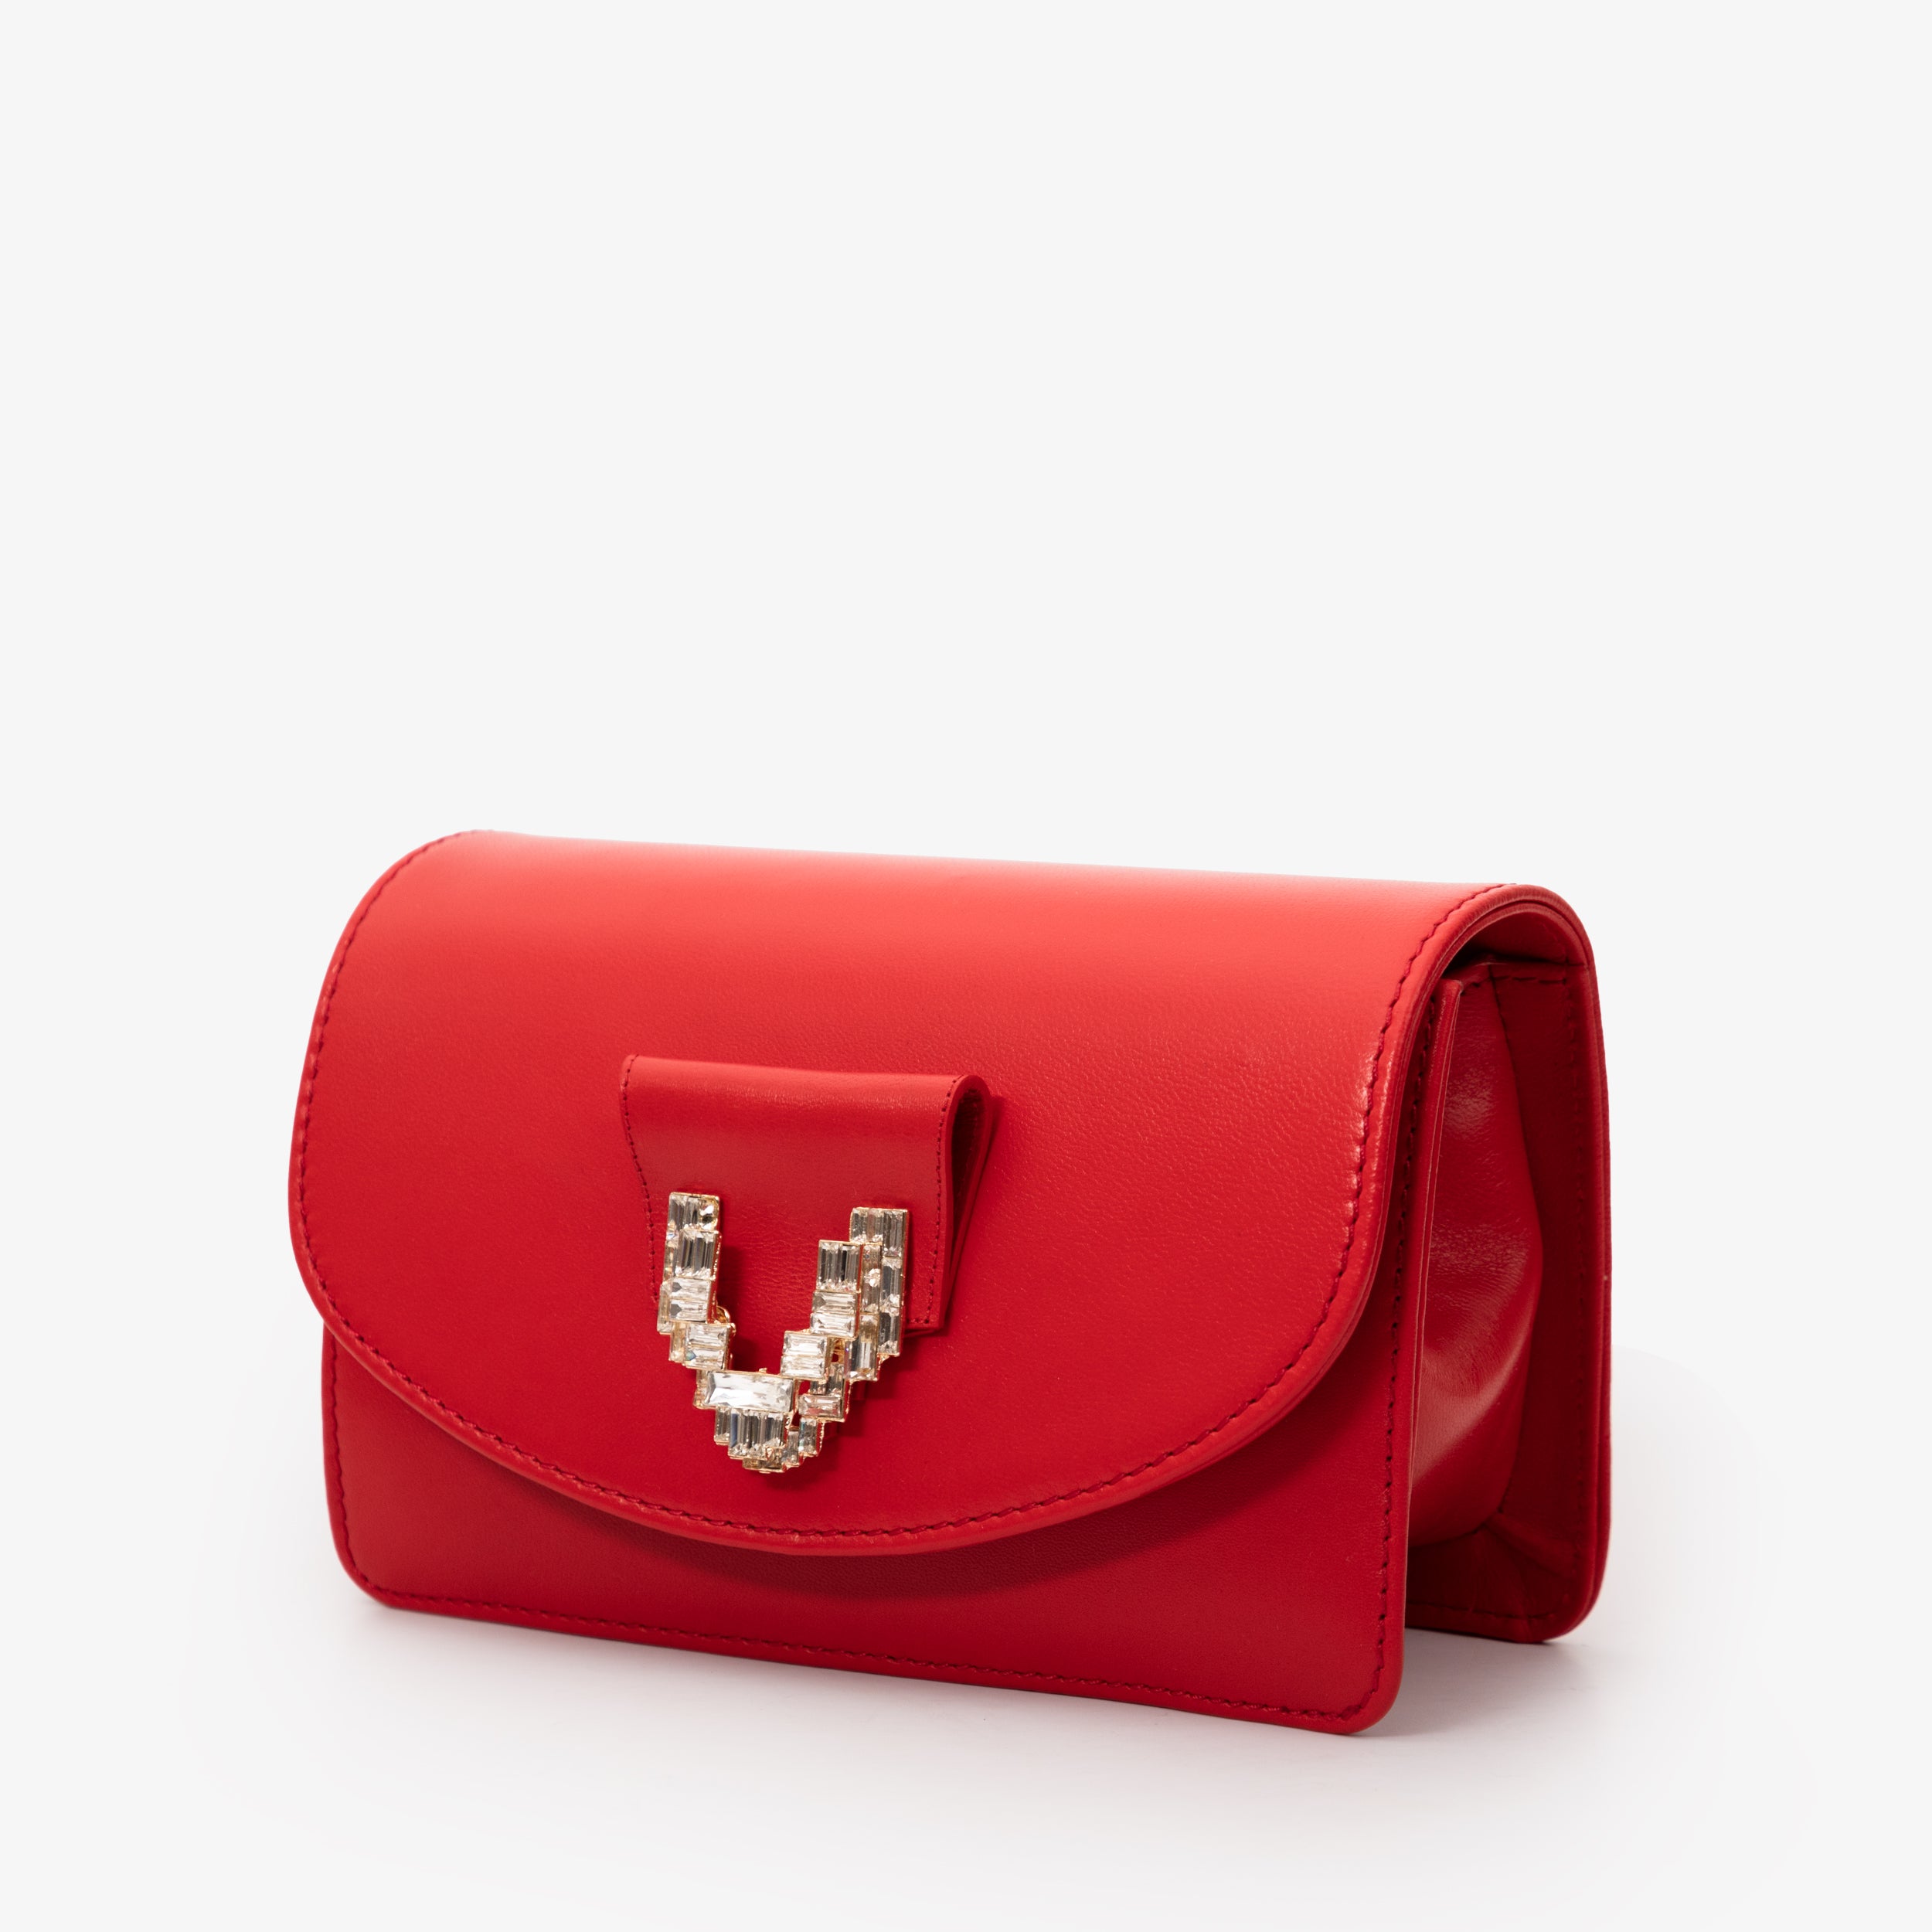 The Love Red  Leather Handbag